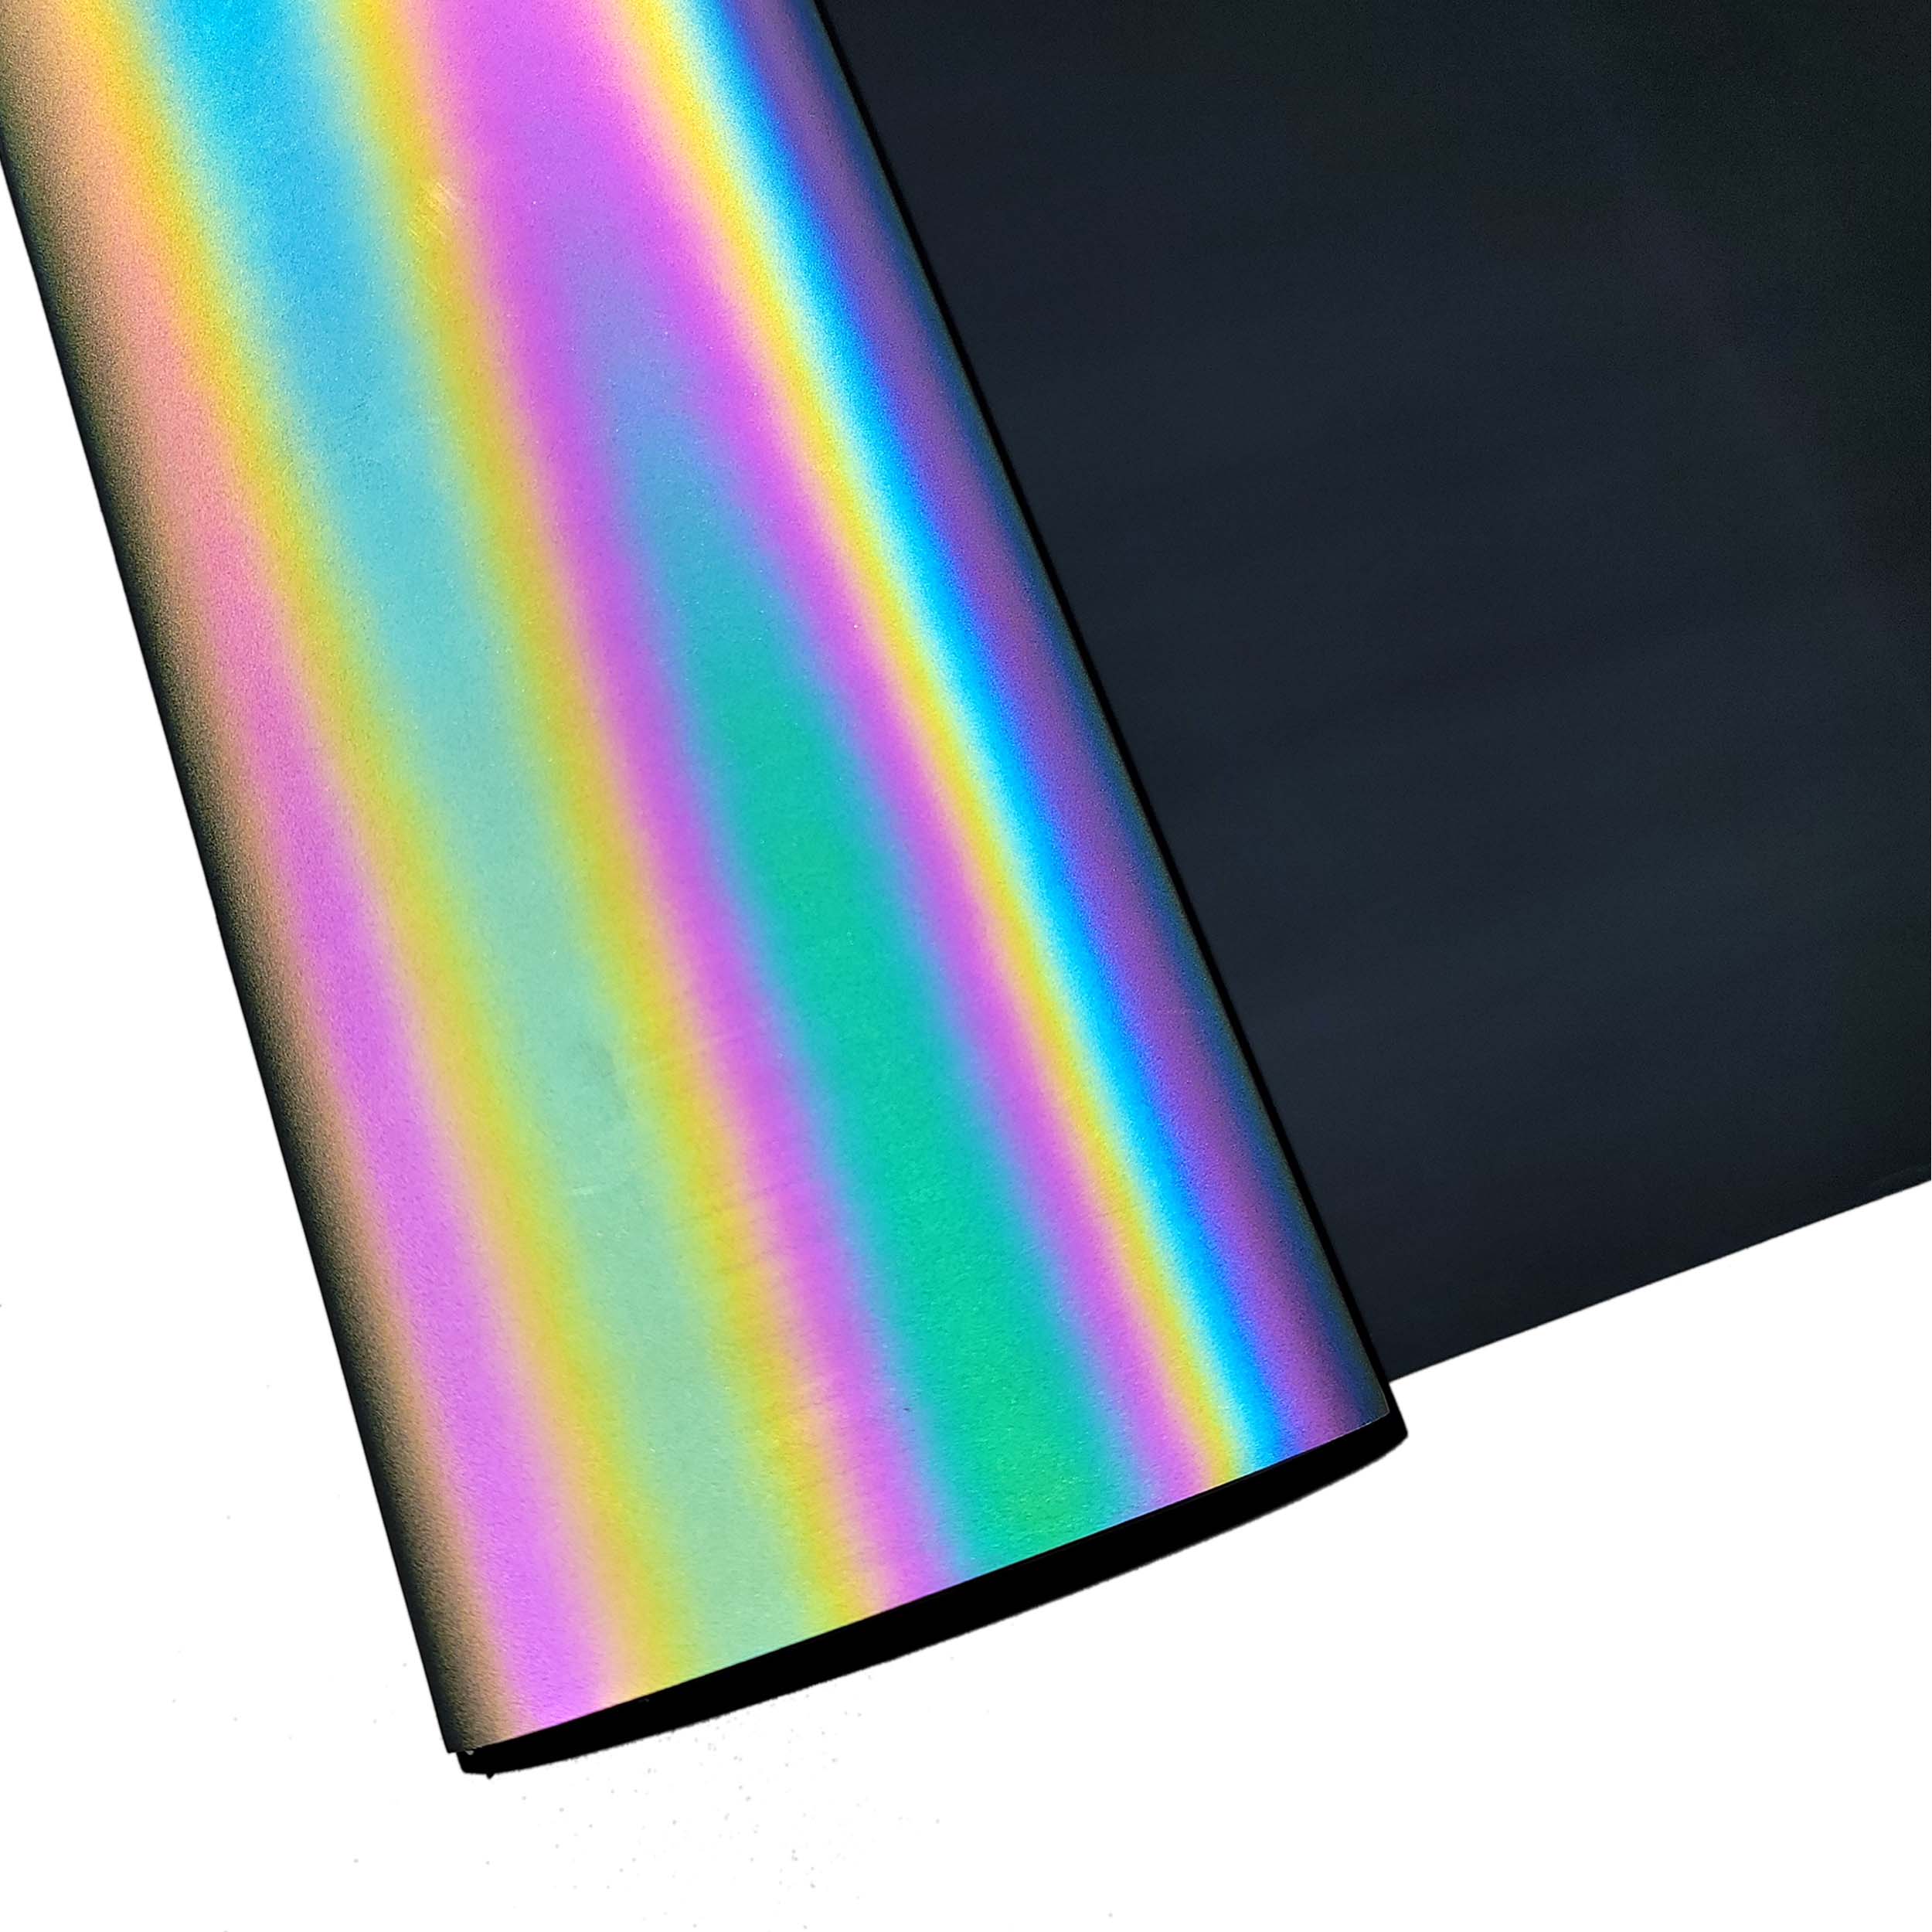 Detalhe da Película Refletiva RainbowIrridescente5